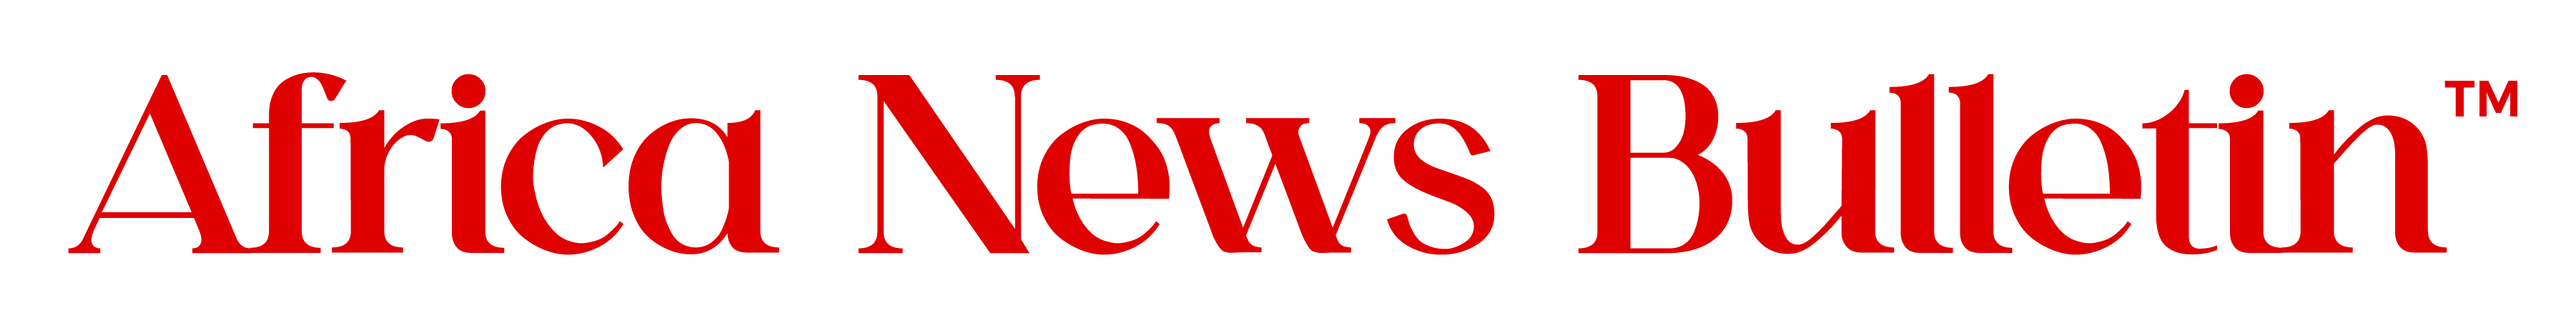 Africa News Bulletin